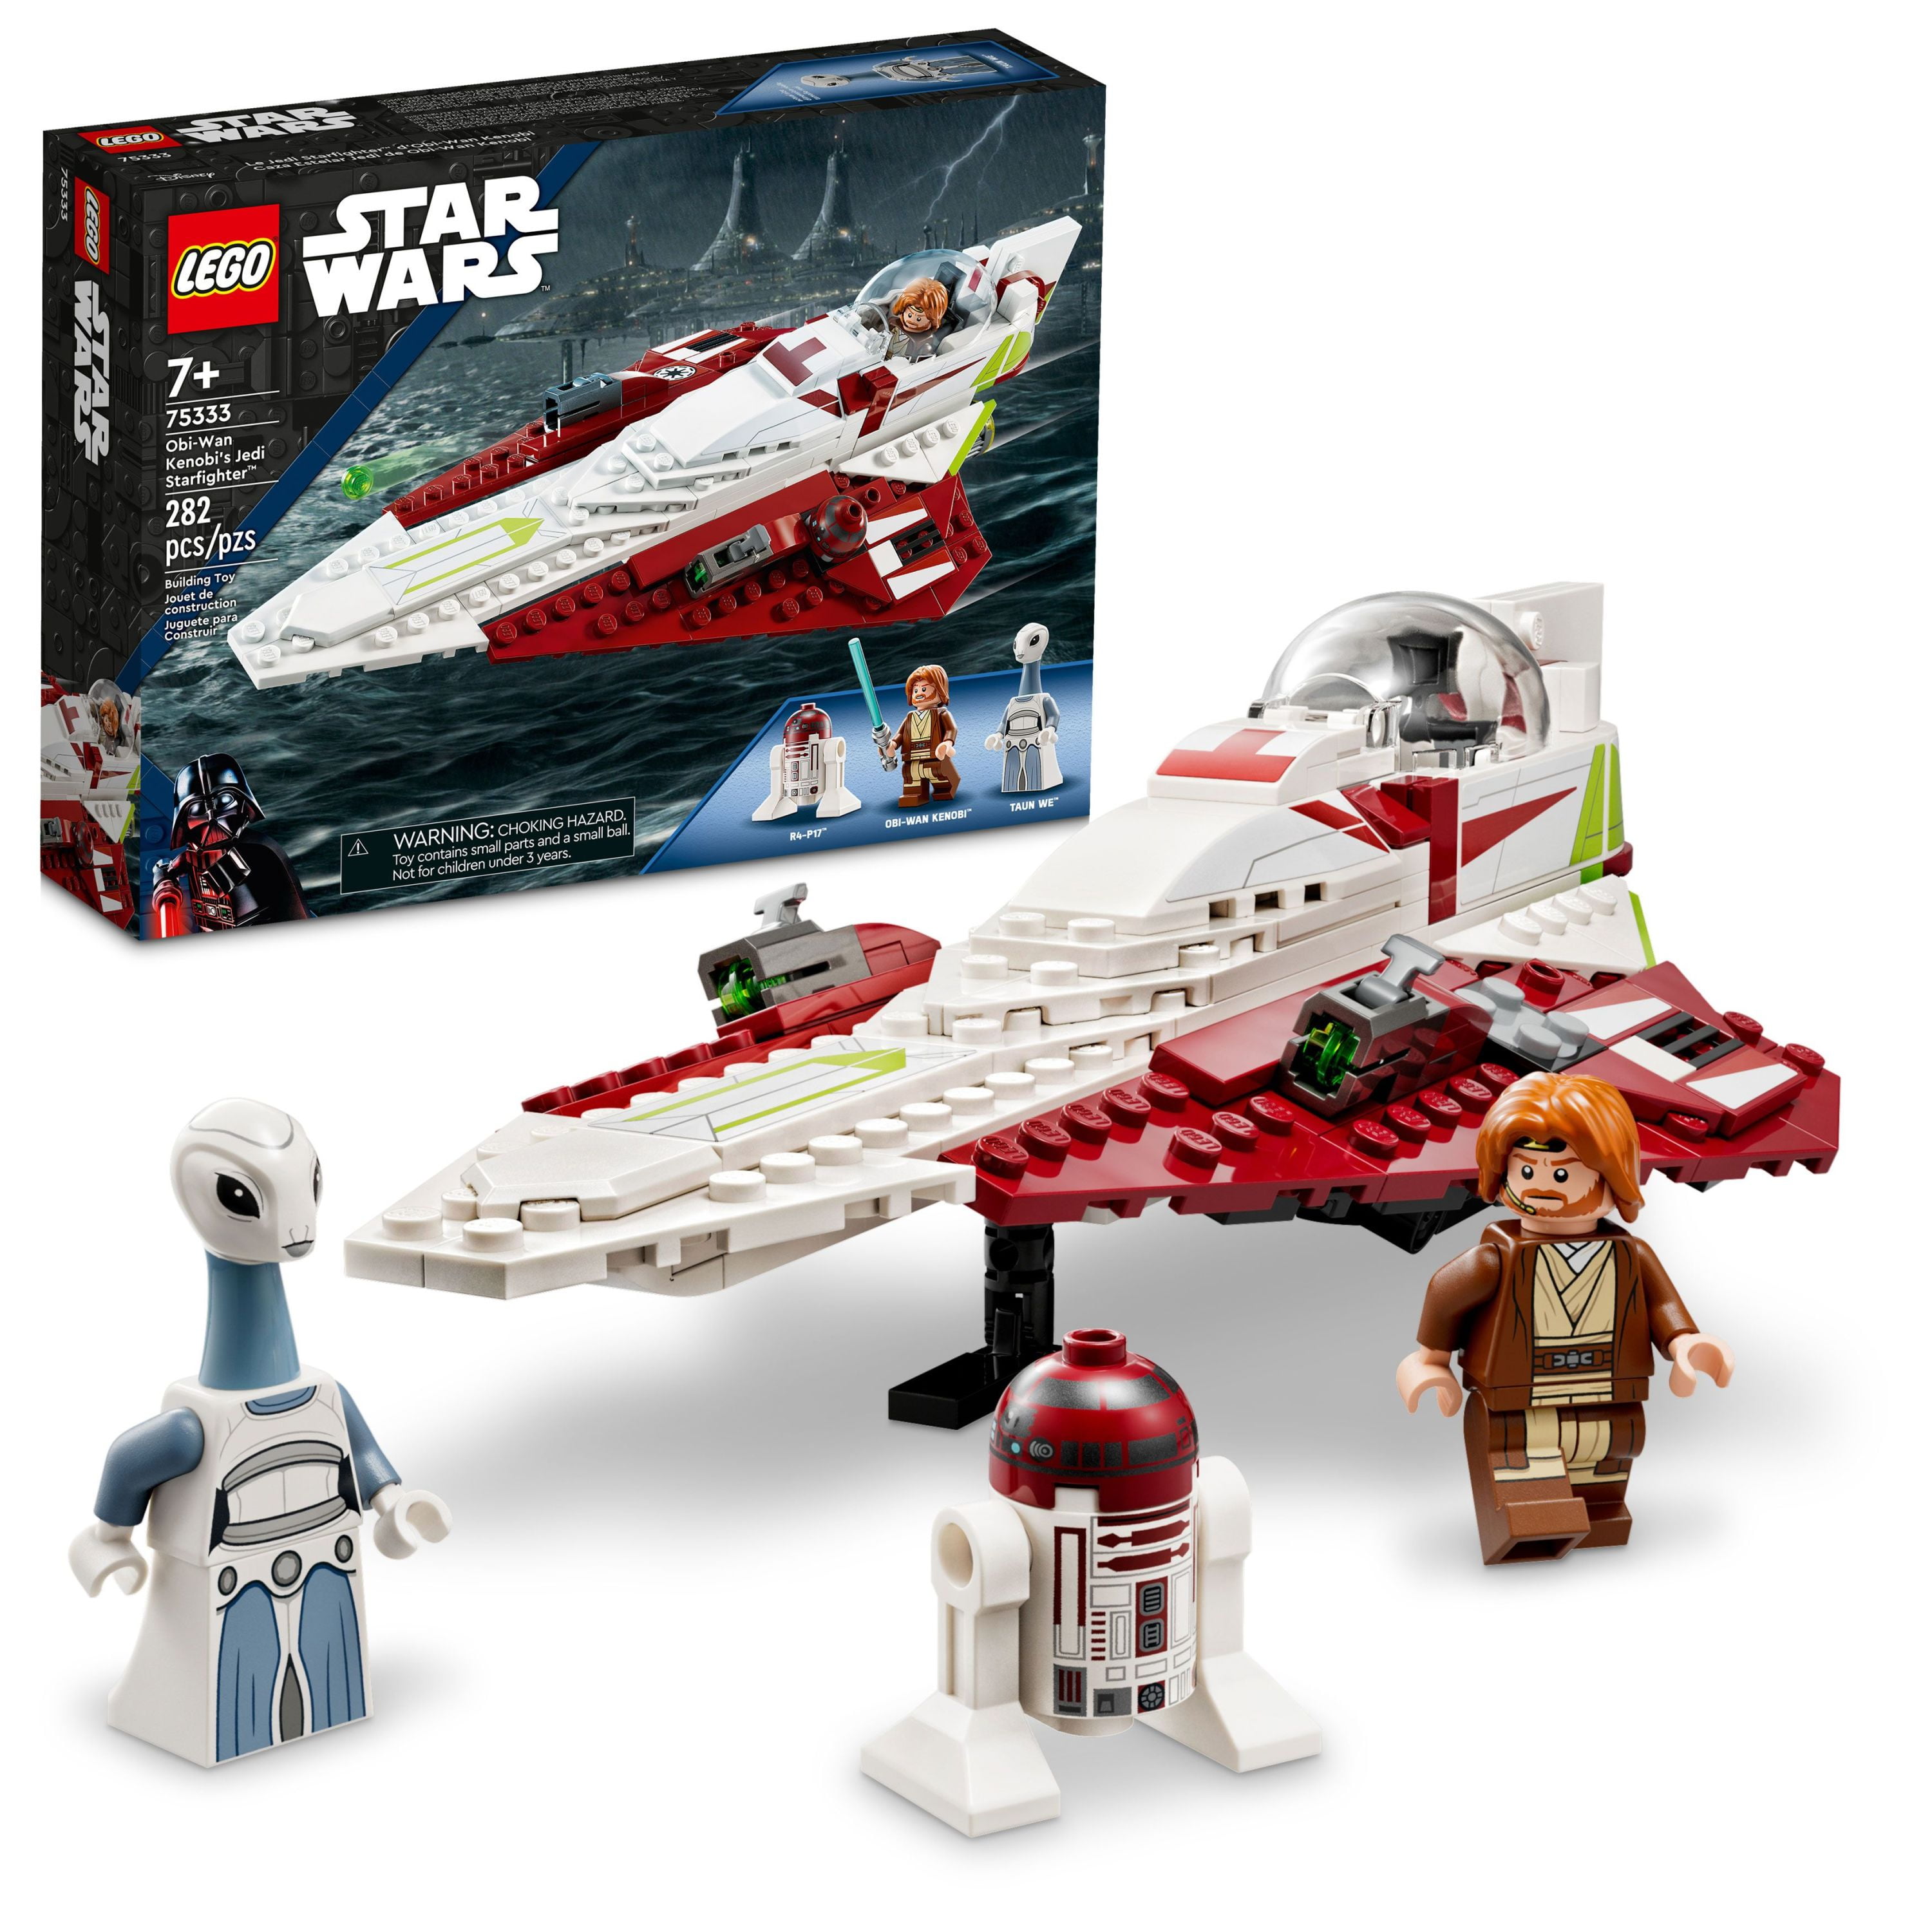 LEGO Star Wars Obi-Wan Kenobis Jedi Starfighter 75333 Building Set